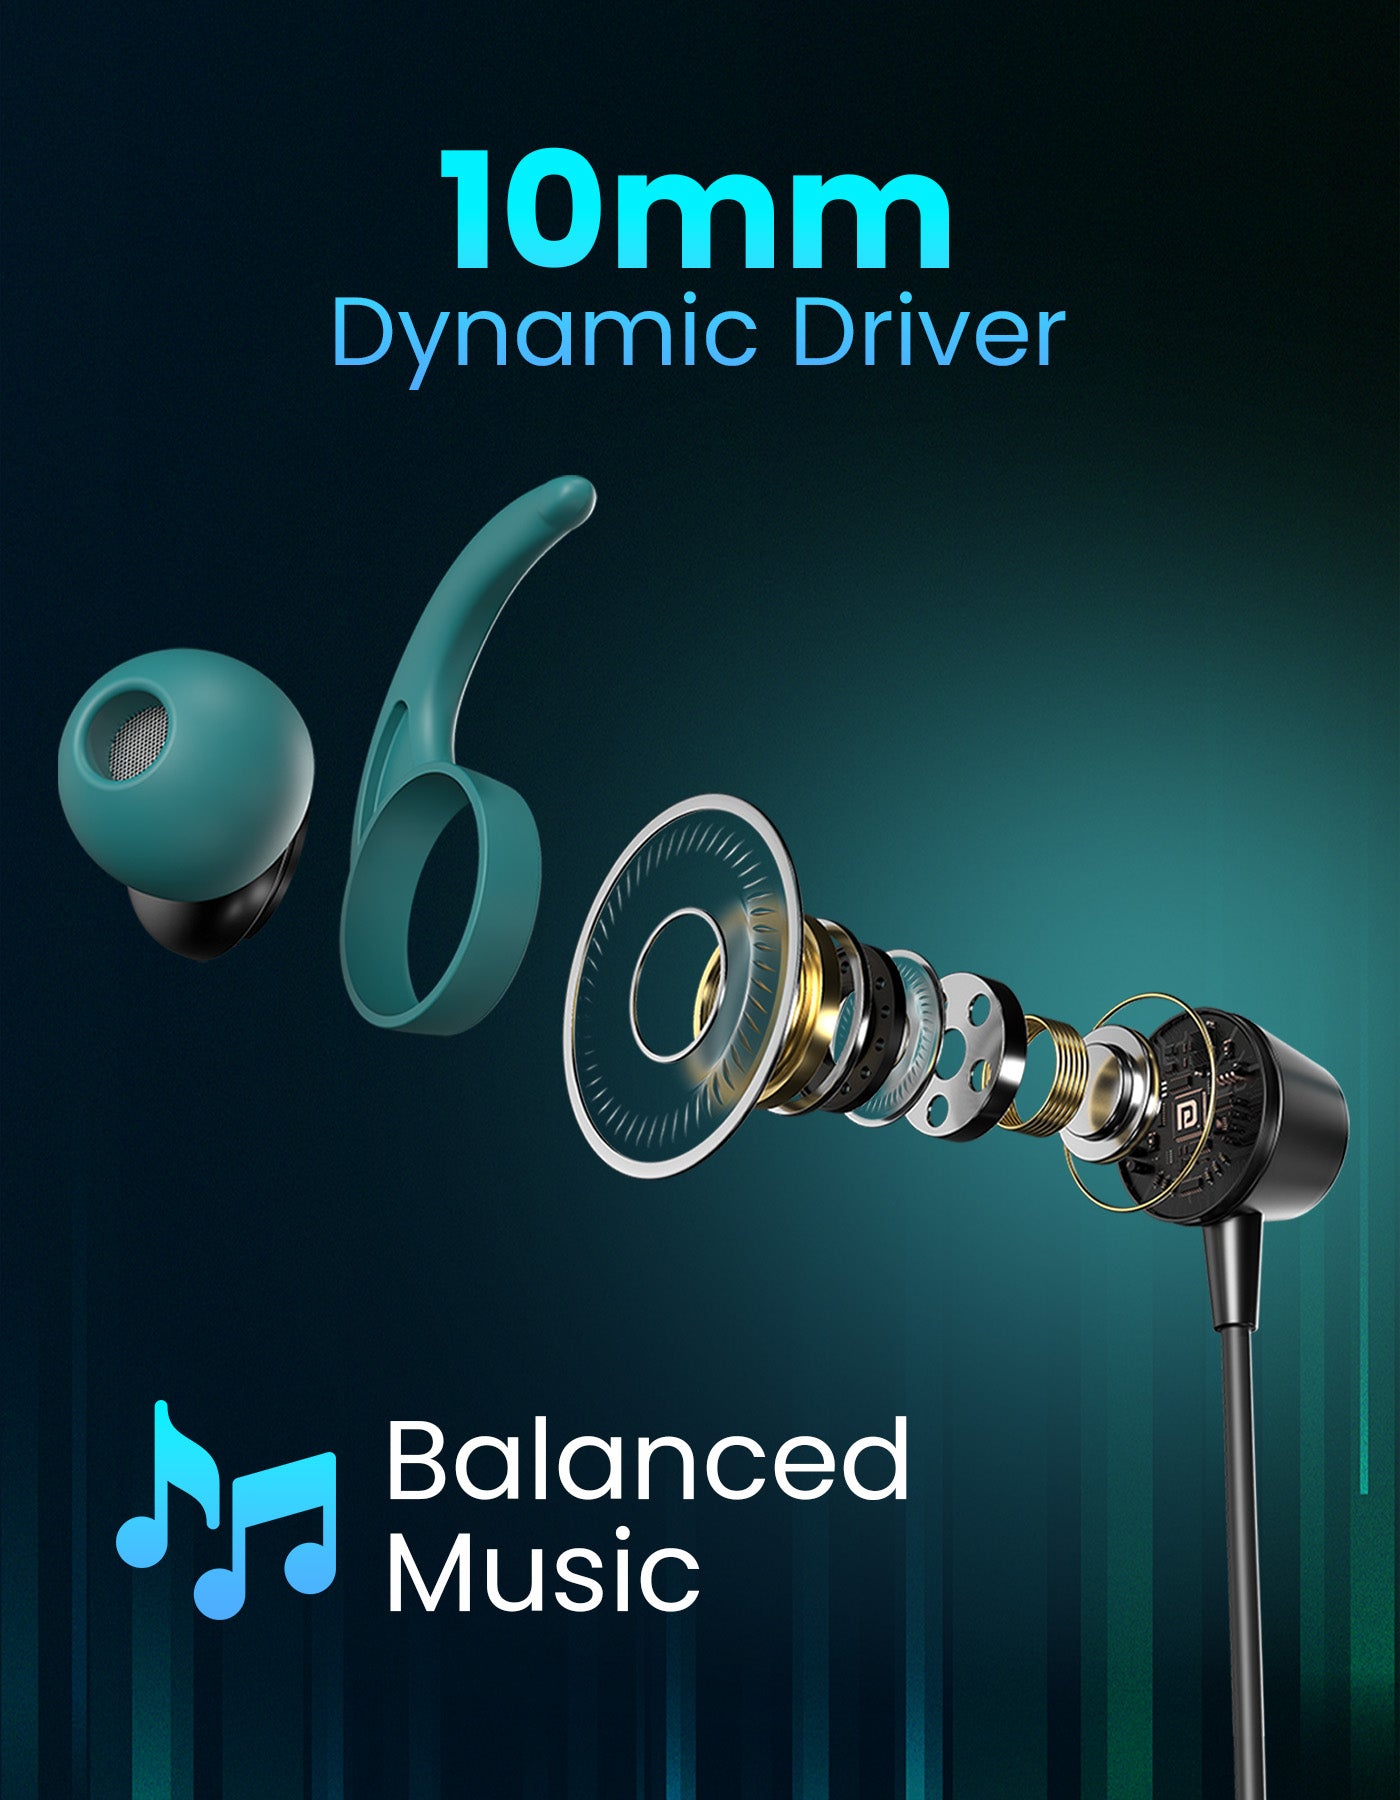 portronics neckband| Neckband bluetooth headphones harmonics x2 with 10mm dynamic driver